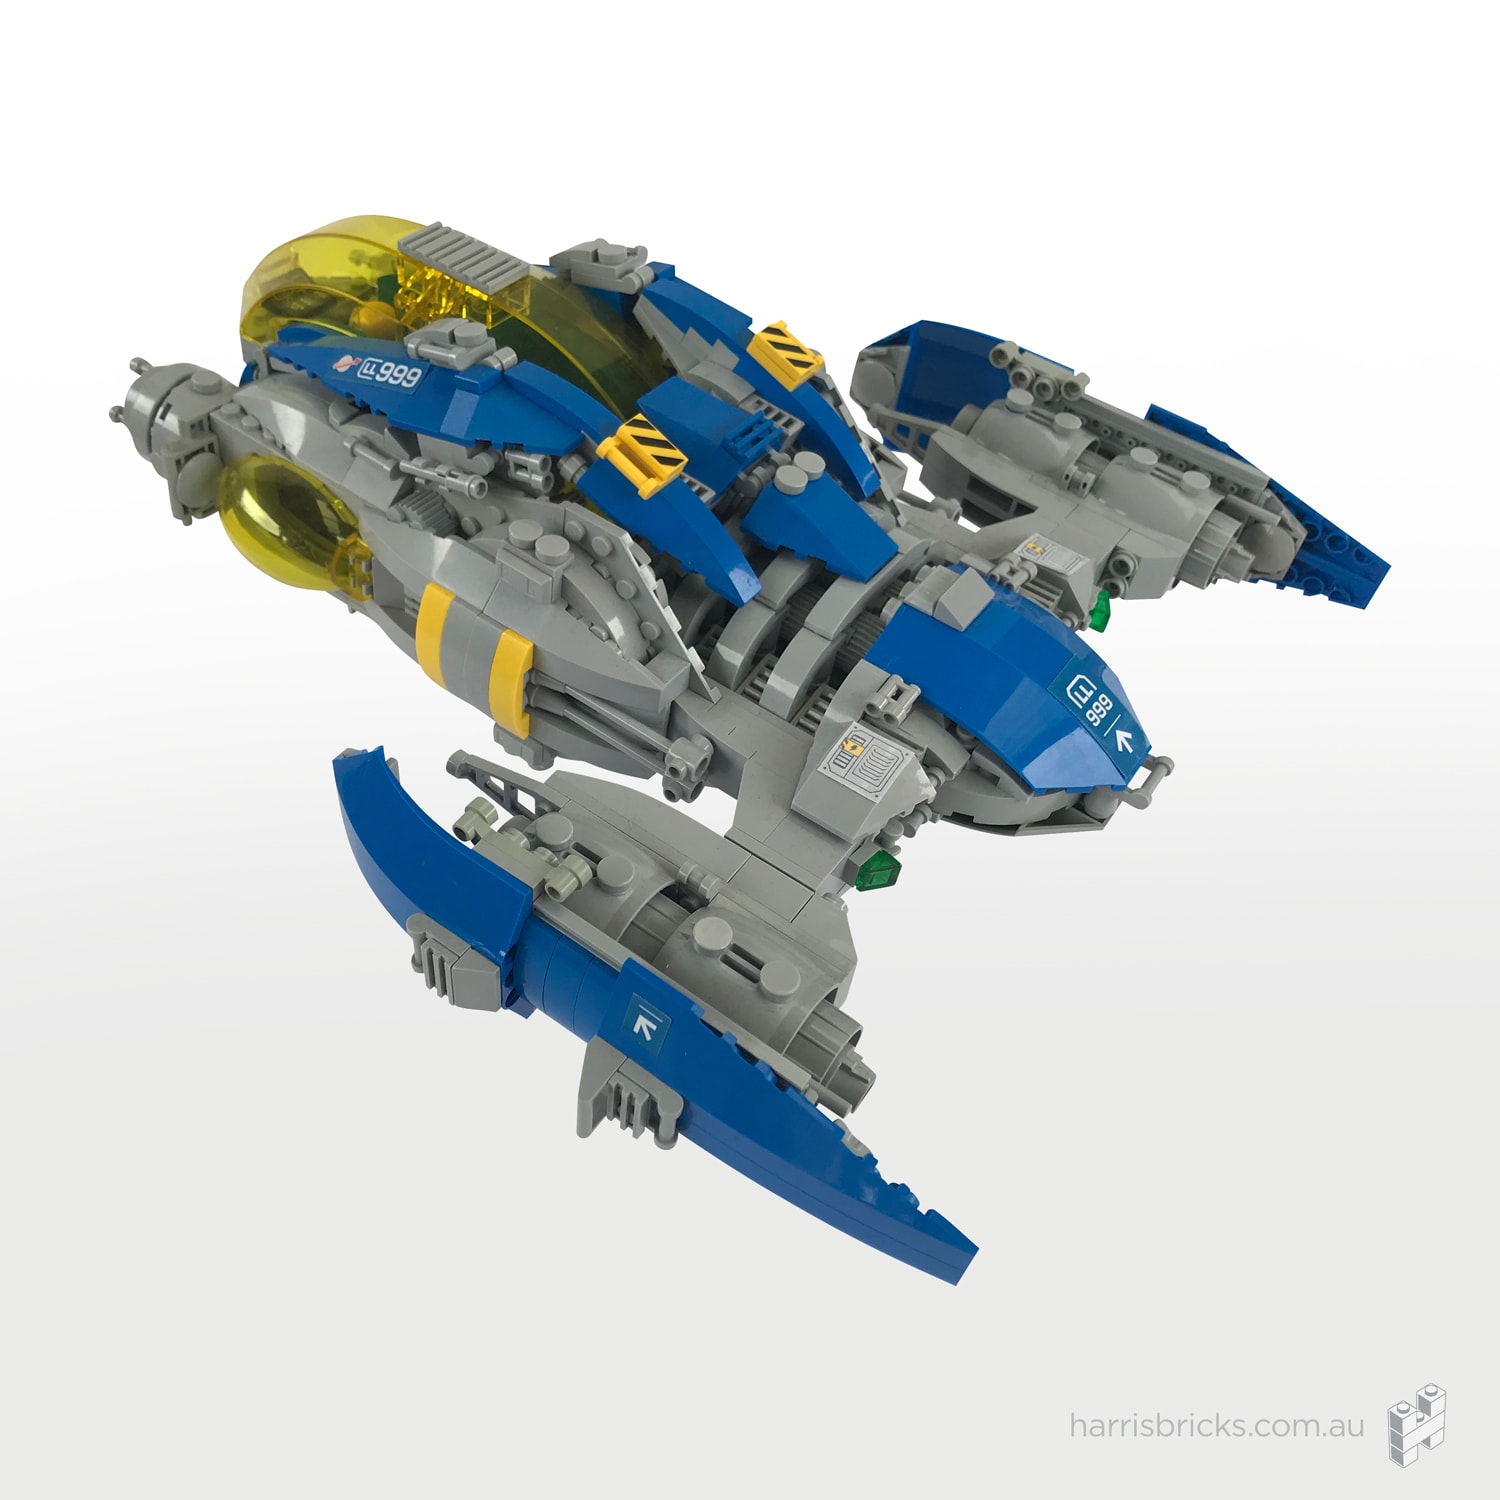 A 83 Exploration Base Harrisbricks Neo Classic Space Lego Moc